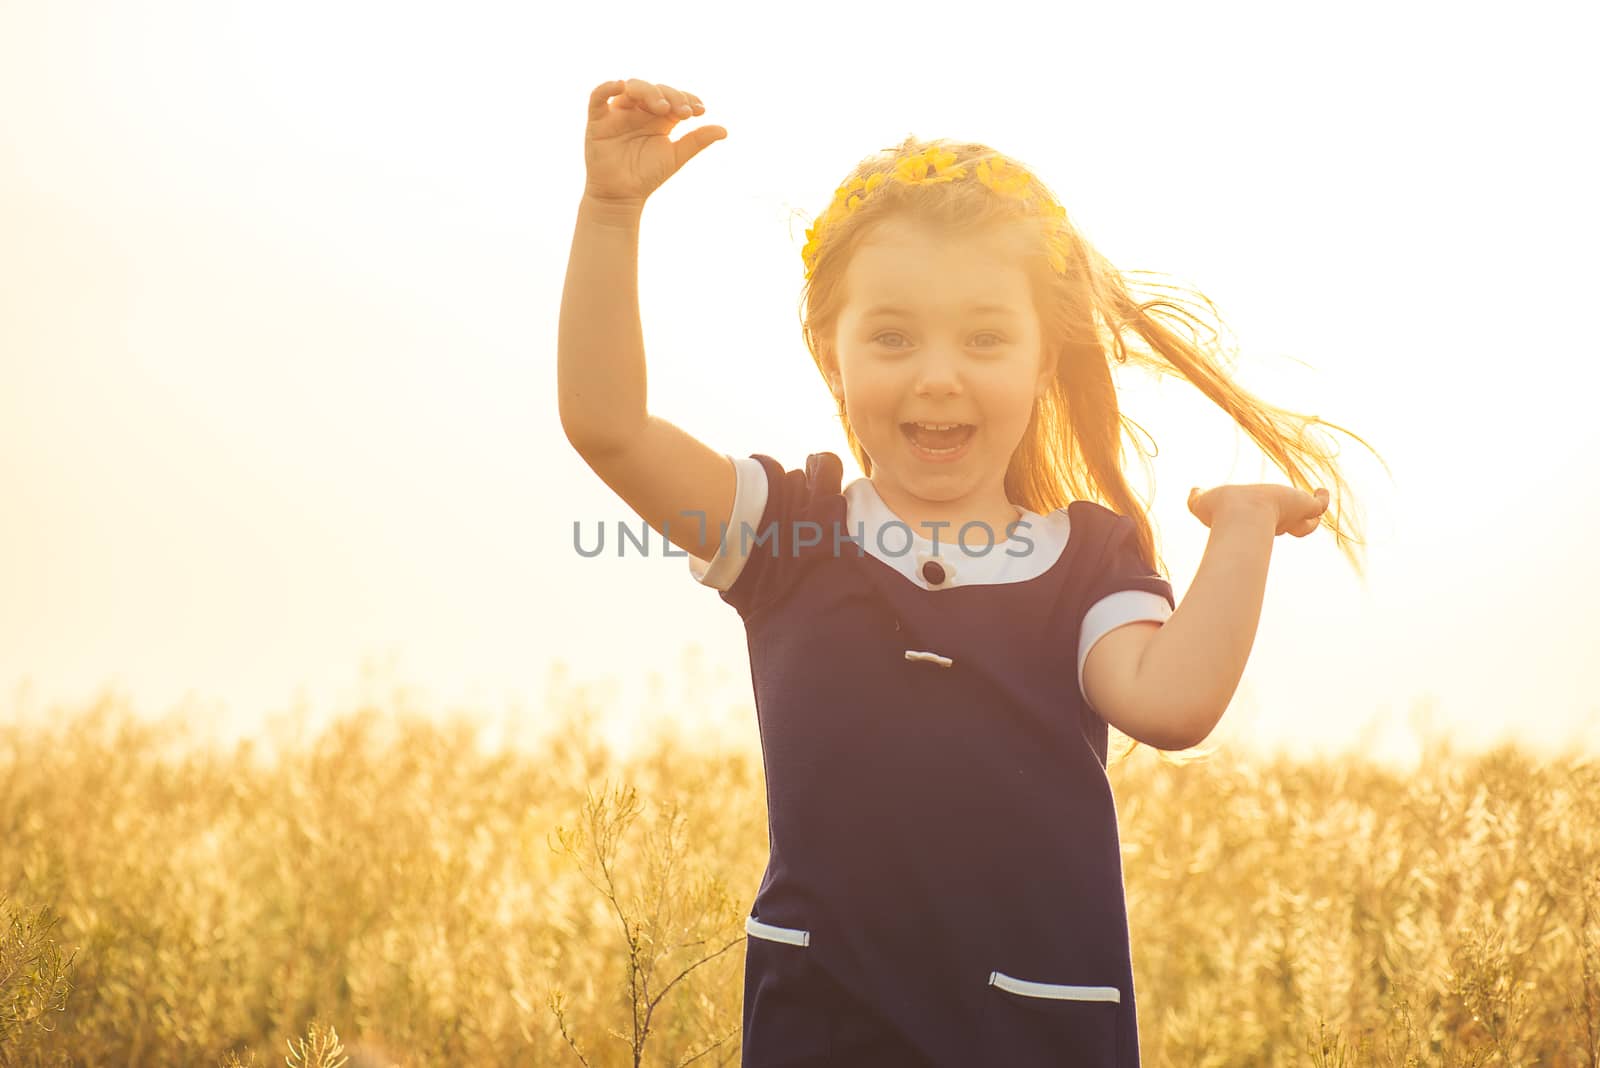 the beautiful little girl in a blue dress laughs, raising hands up